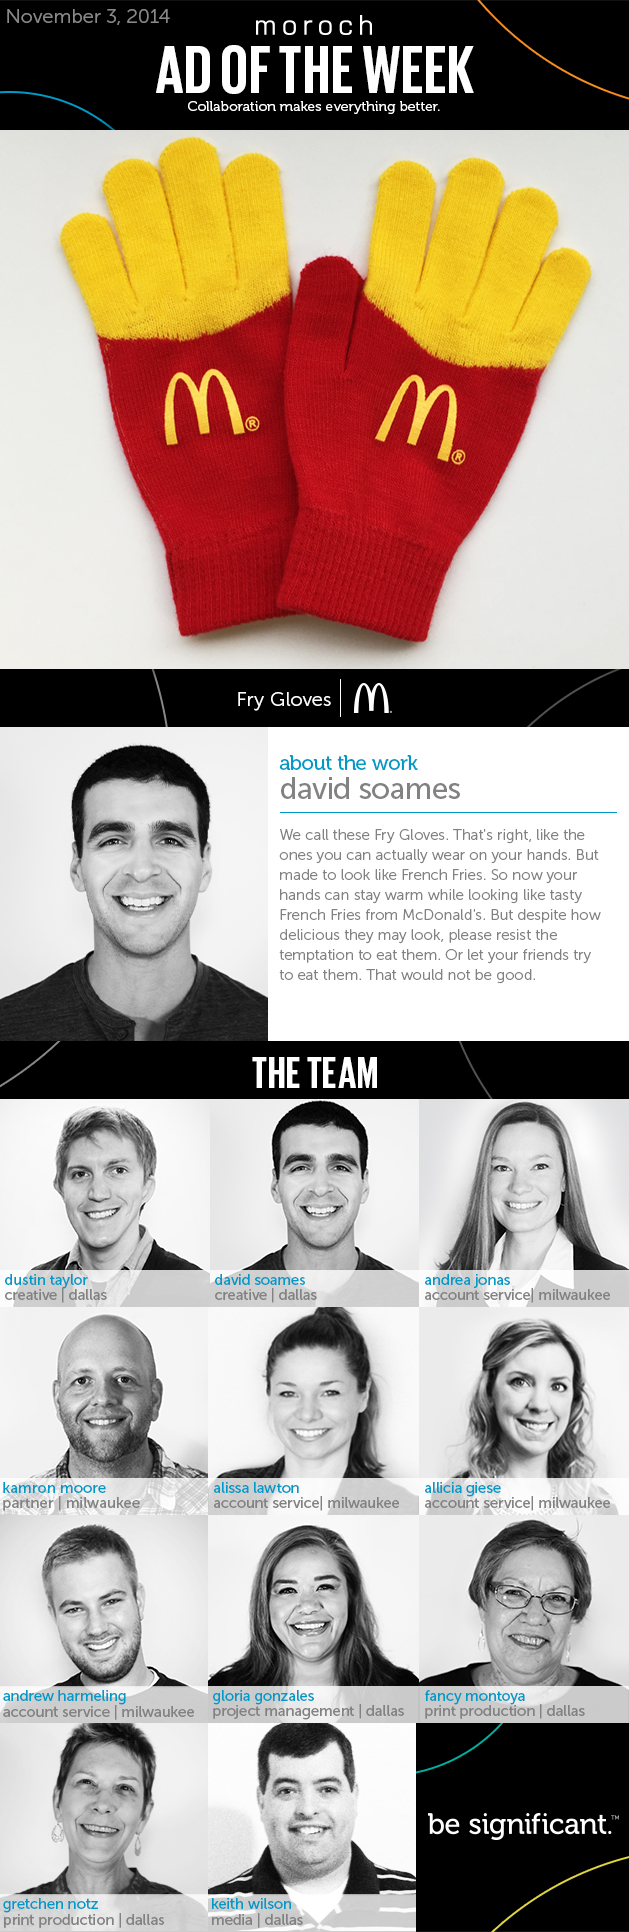 McDonald's Fry Gloves